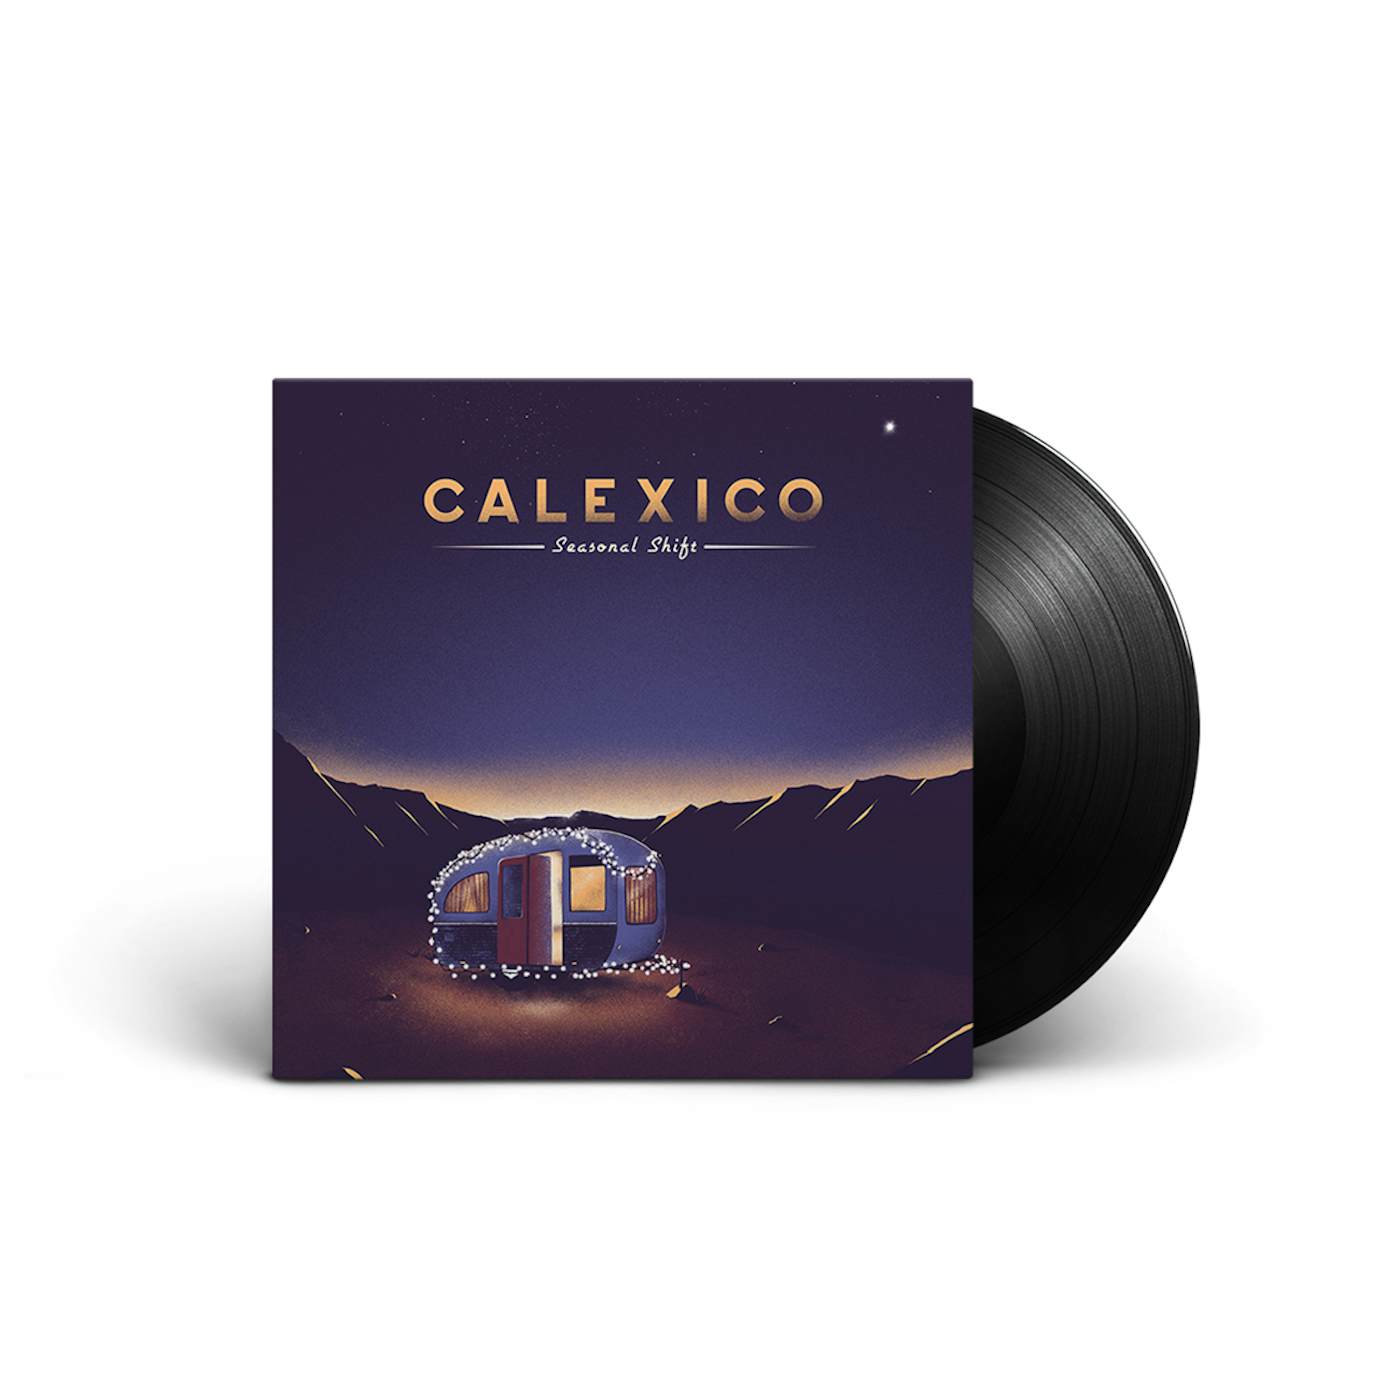 Calexico 'Seasonal Shift' Vinyl (Black)